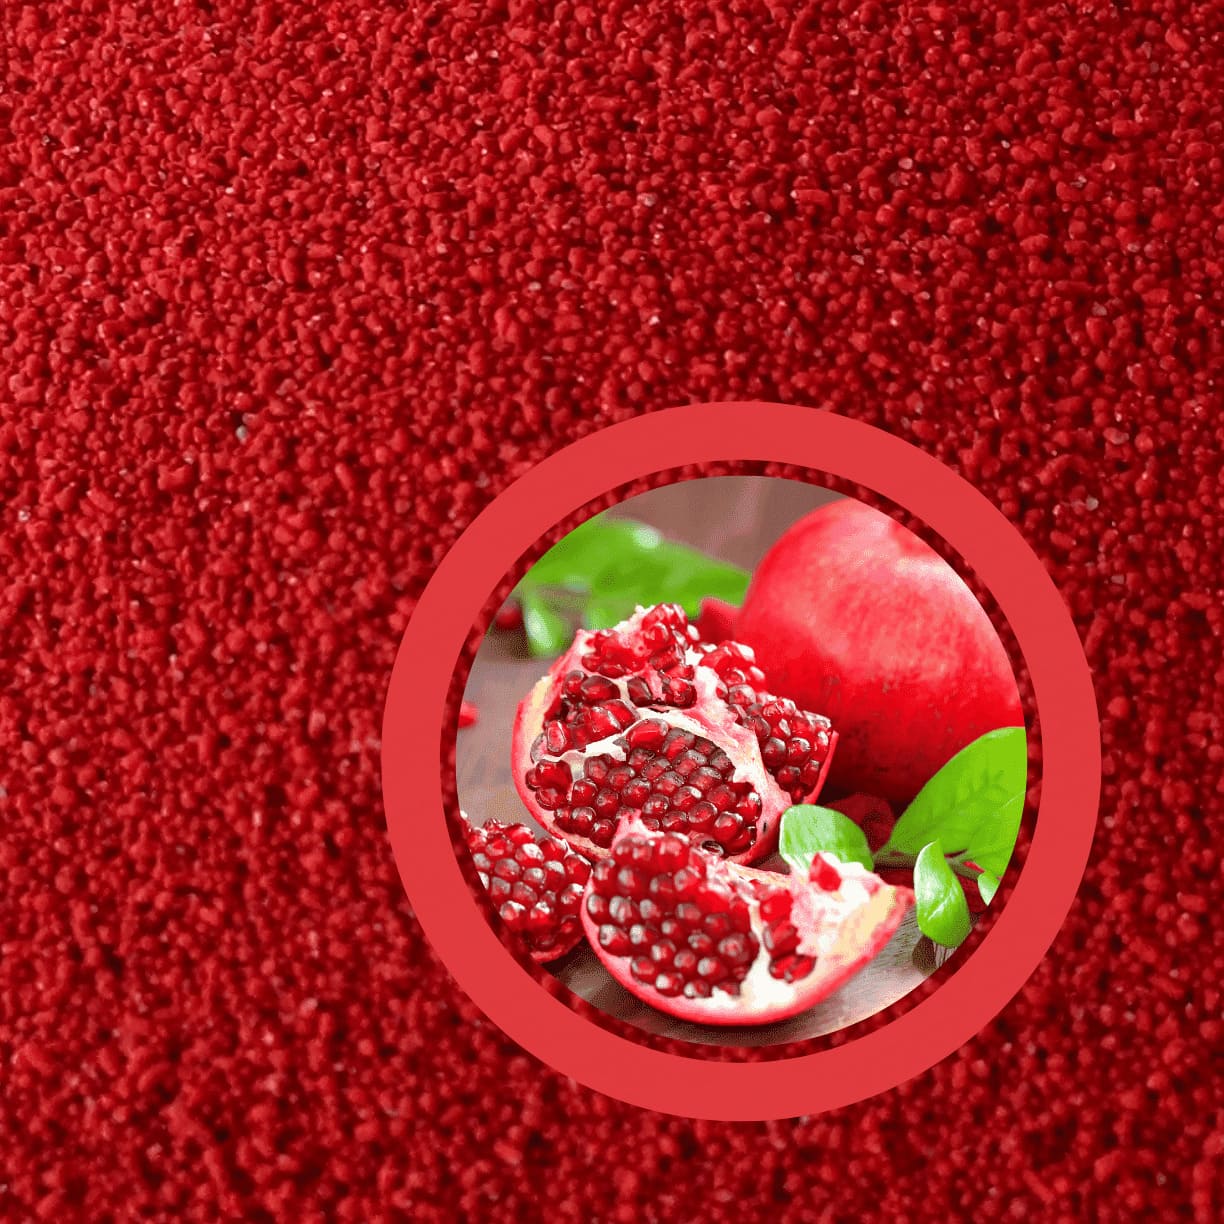 Encapsulated-Pomegranate-Extract-Beads